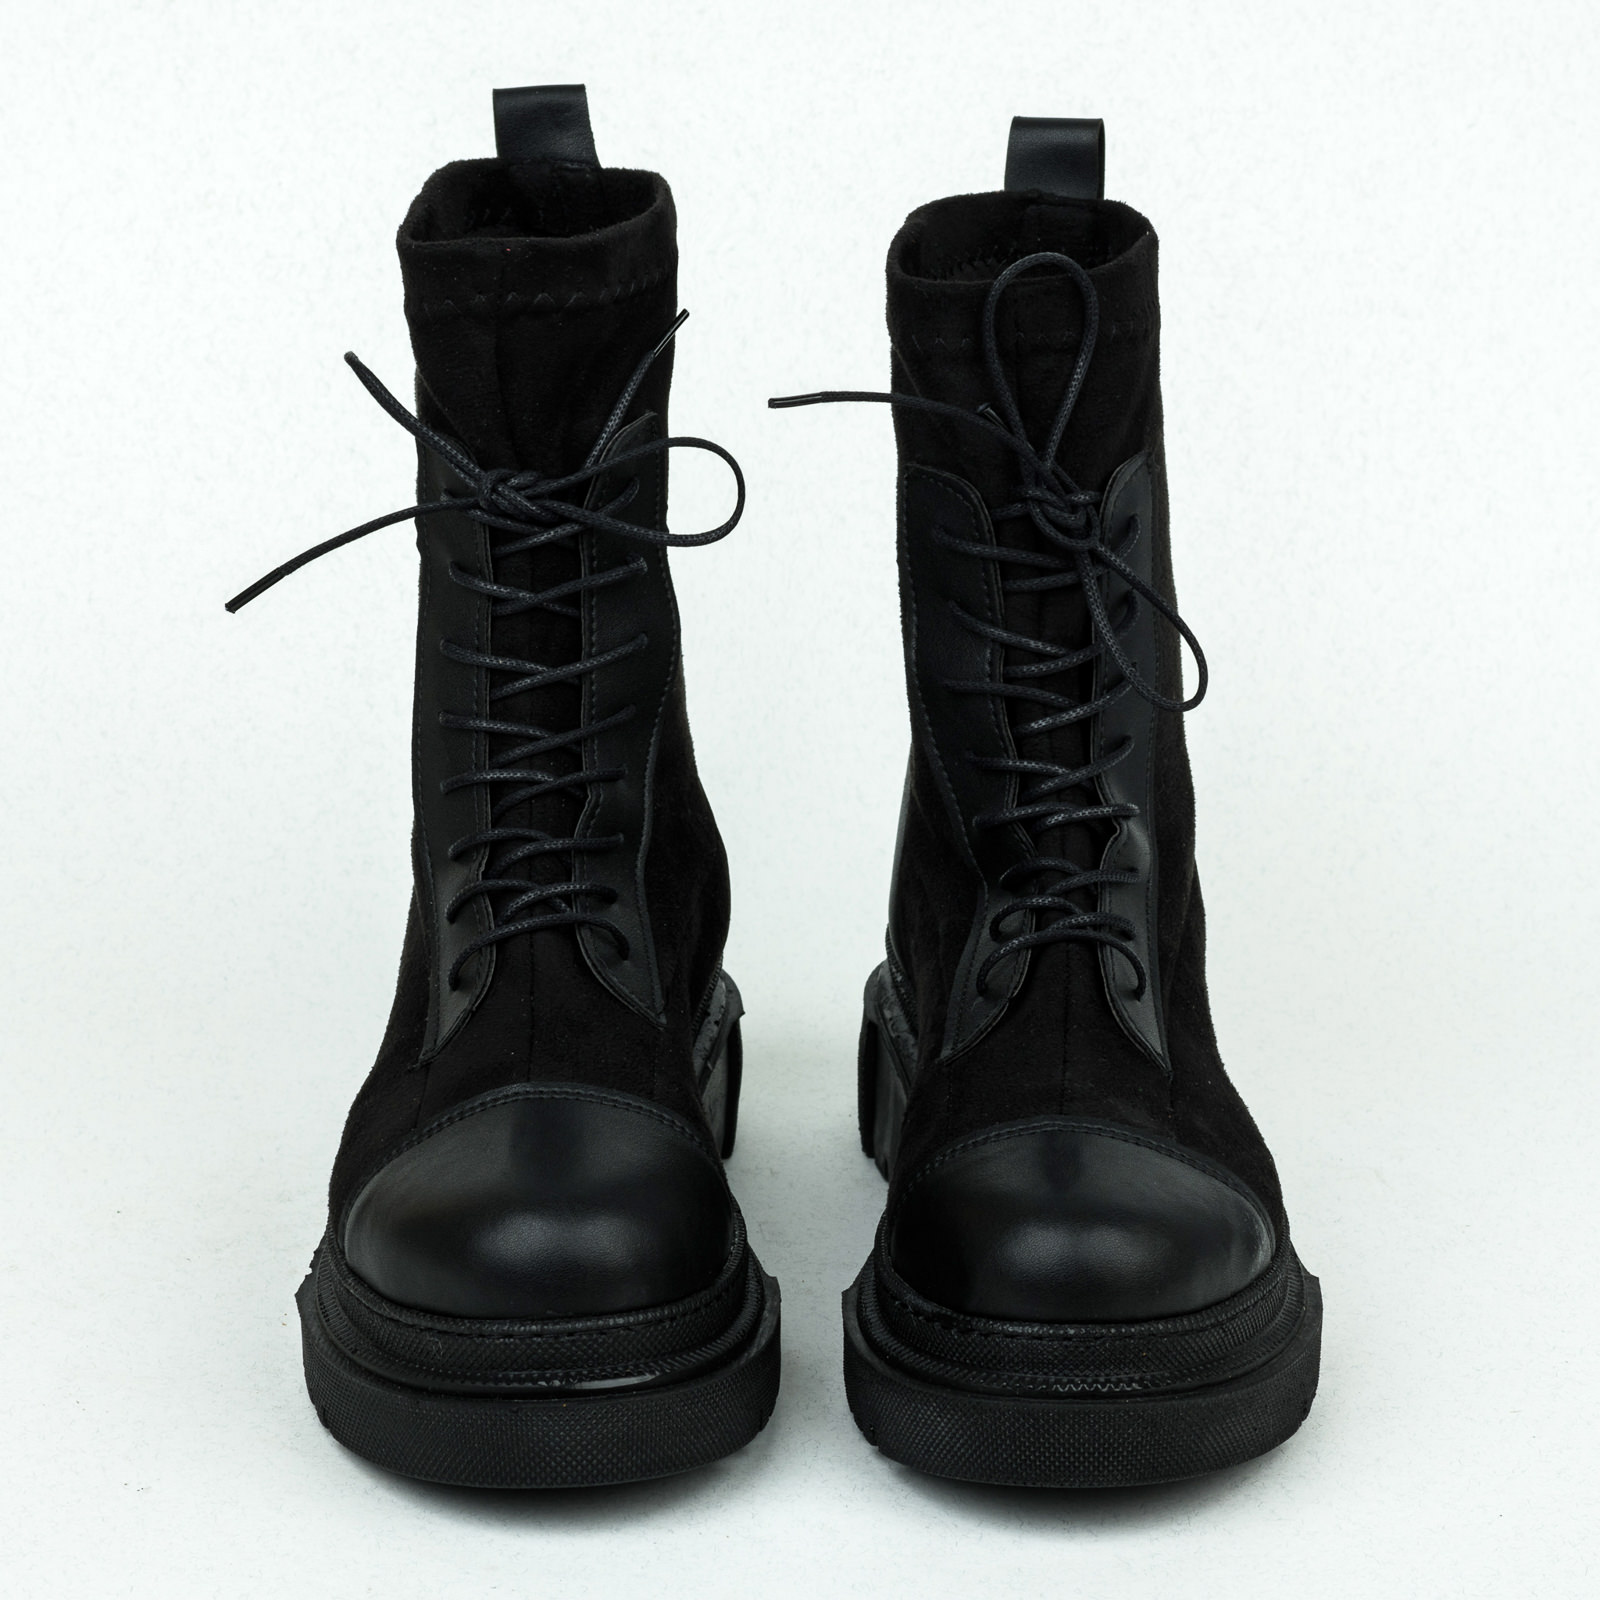 Women ankle boots B195 - BLACK